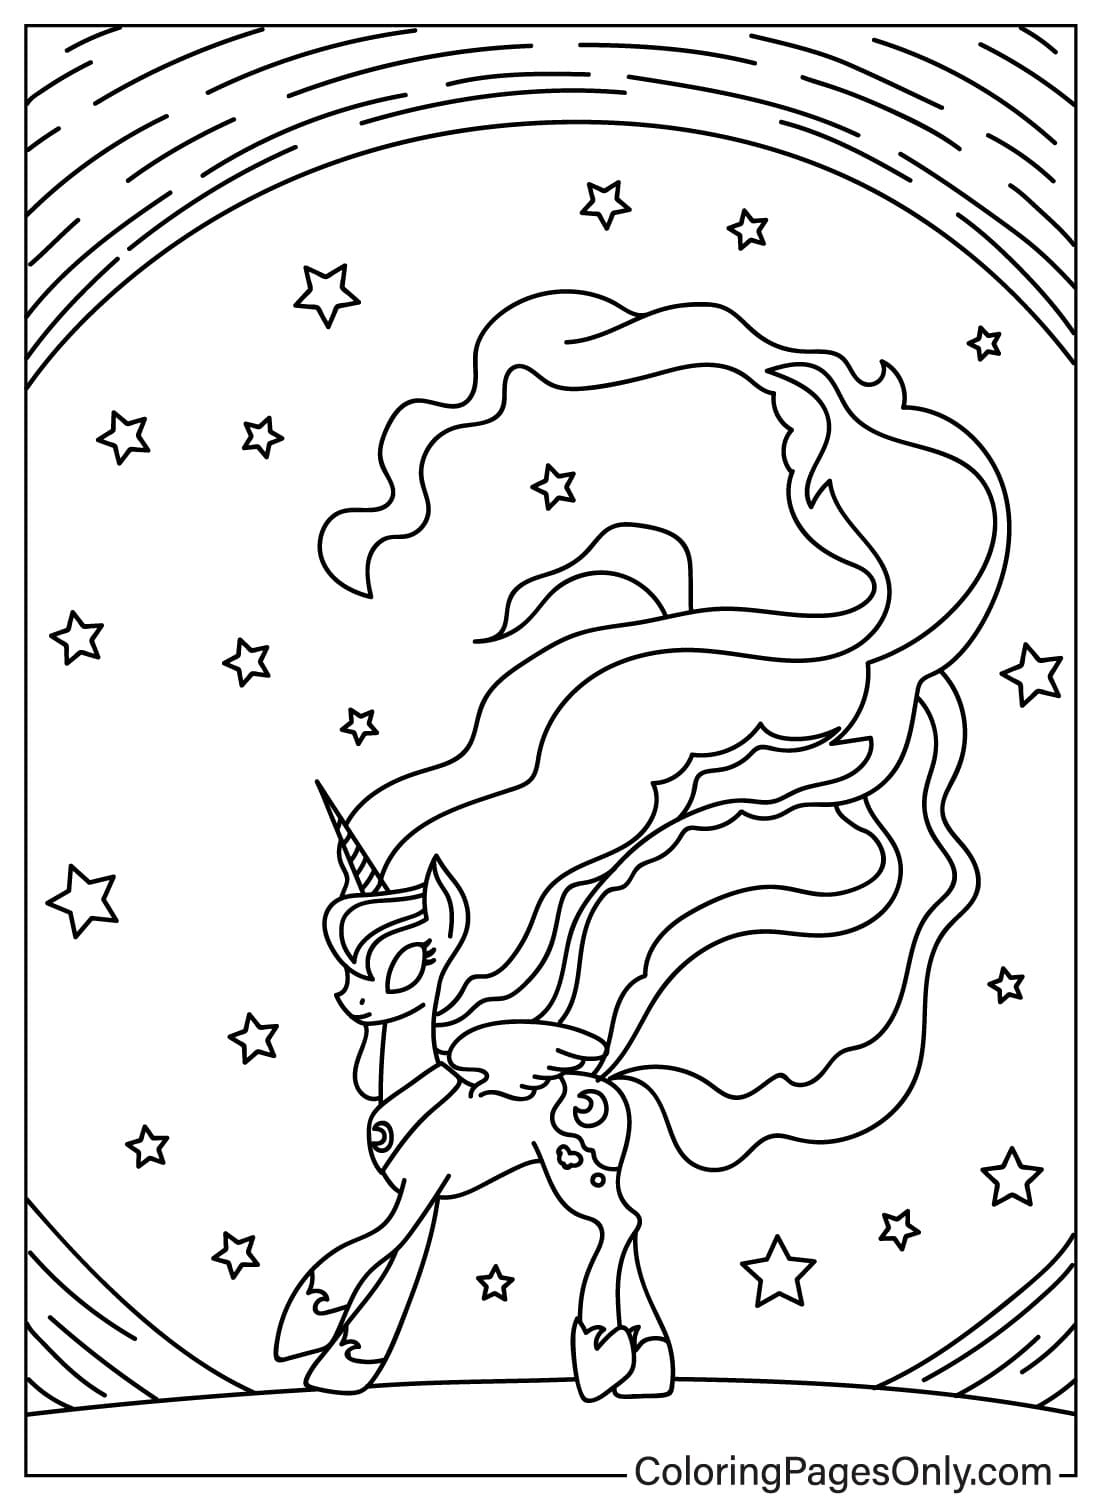 Prinses Luna en de sterrenhemel kleurplaat van prinses Luna